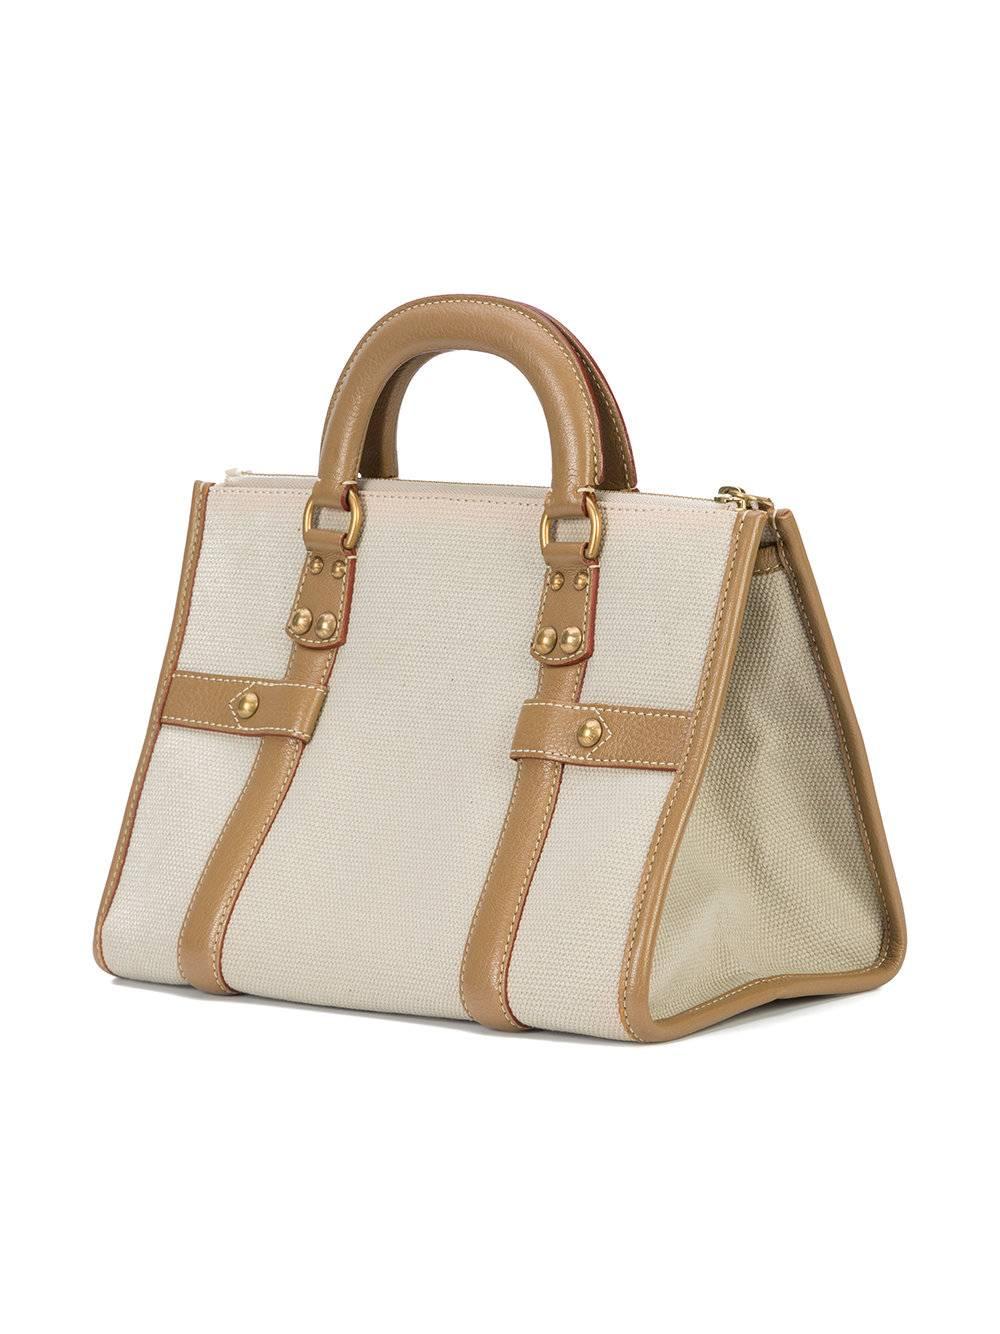 Women's Louis Vuitton Canvas Cognac Speedy 30 Top Handle Satchel Bag 